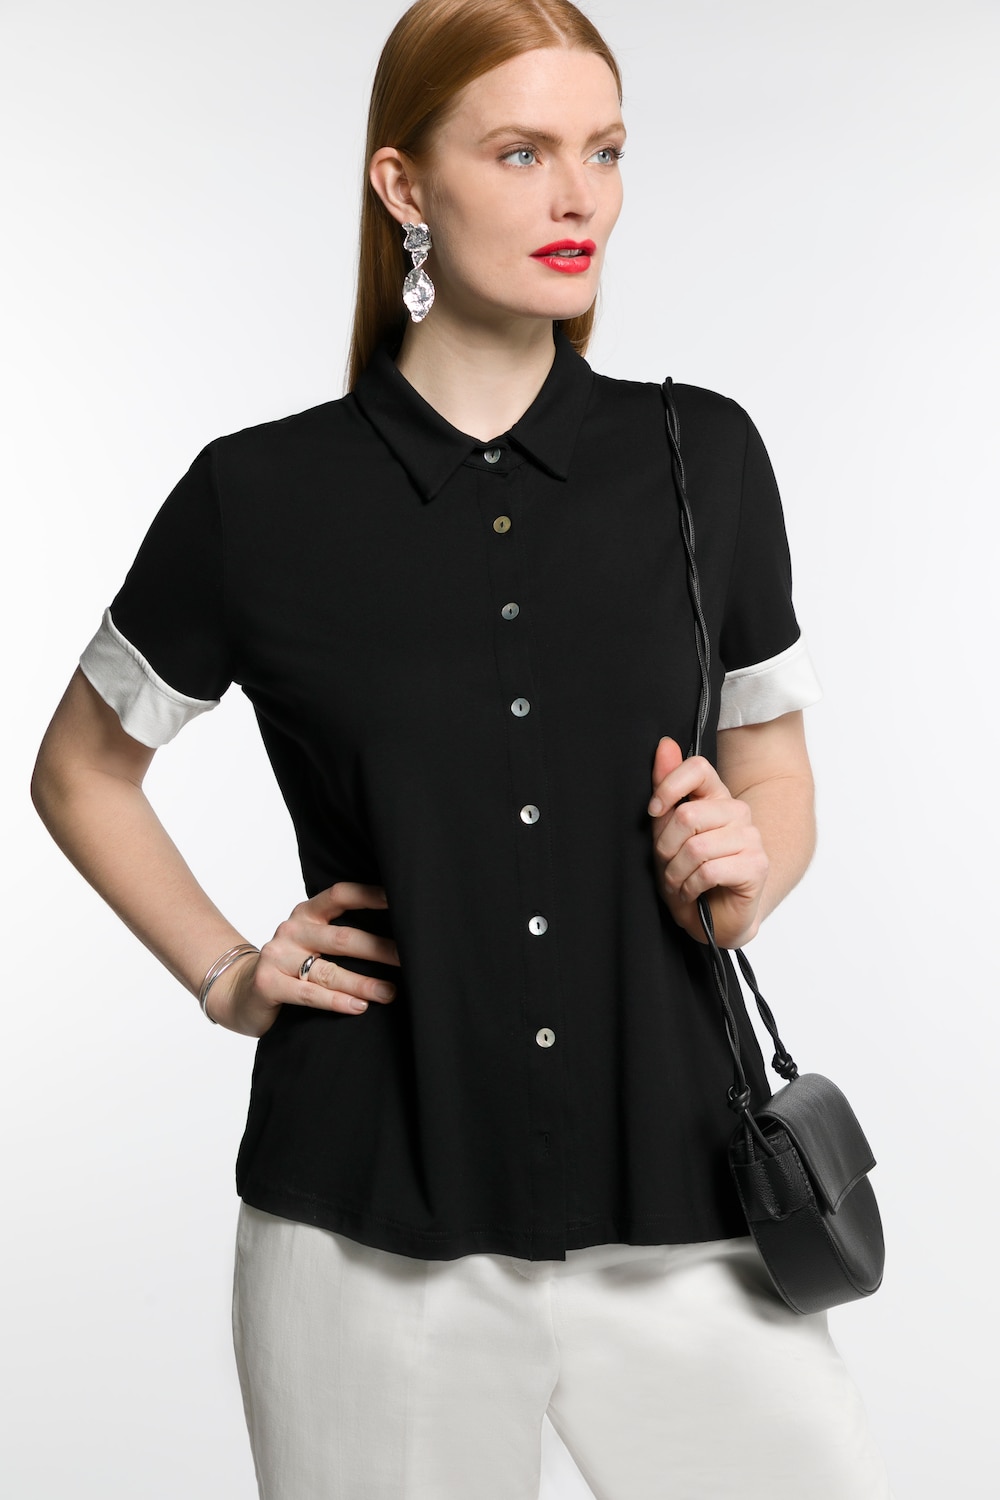 Plus Size Button Front Contrast Accent Short Sleeve Stretch Knit Top, Woman, black, size: 16/18, viscose, Ulla Popken